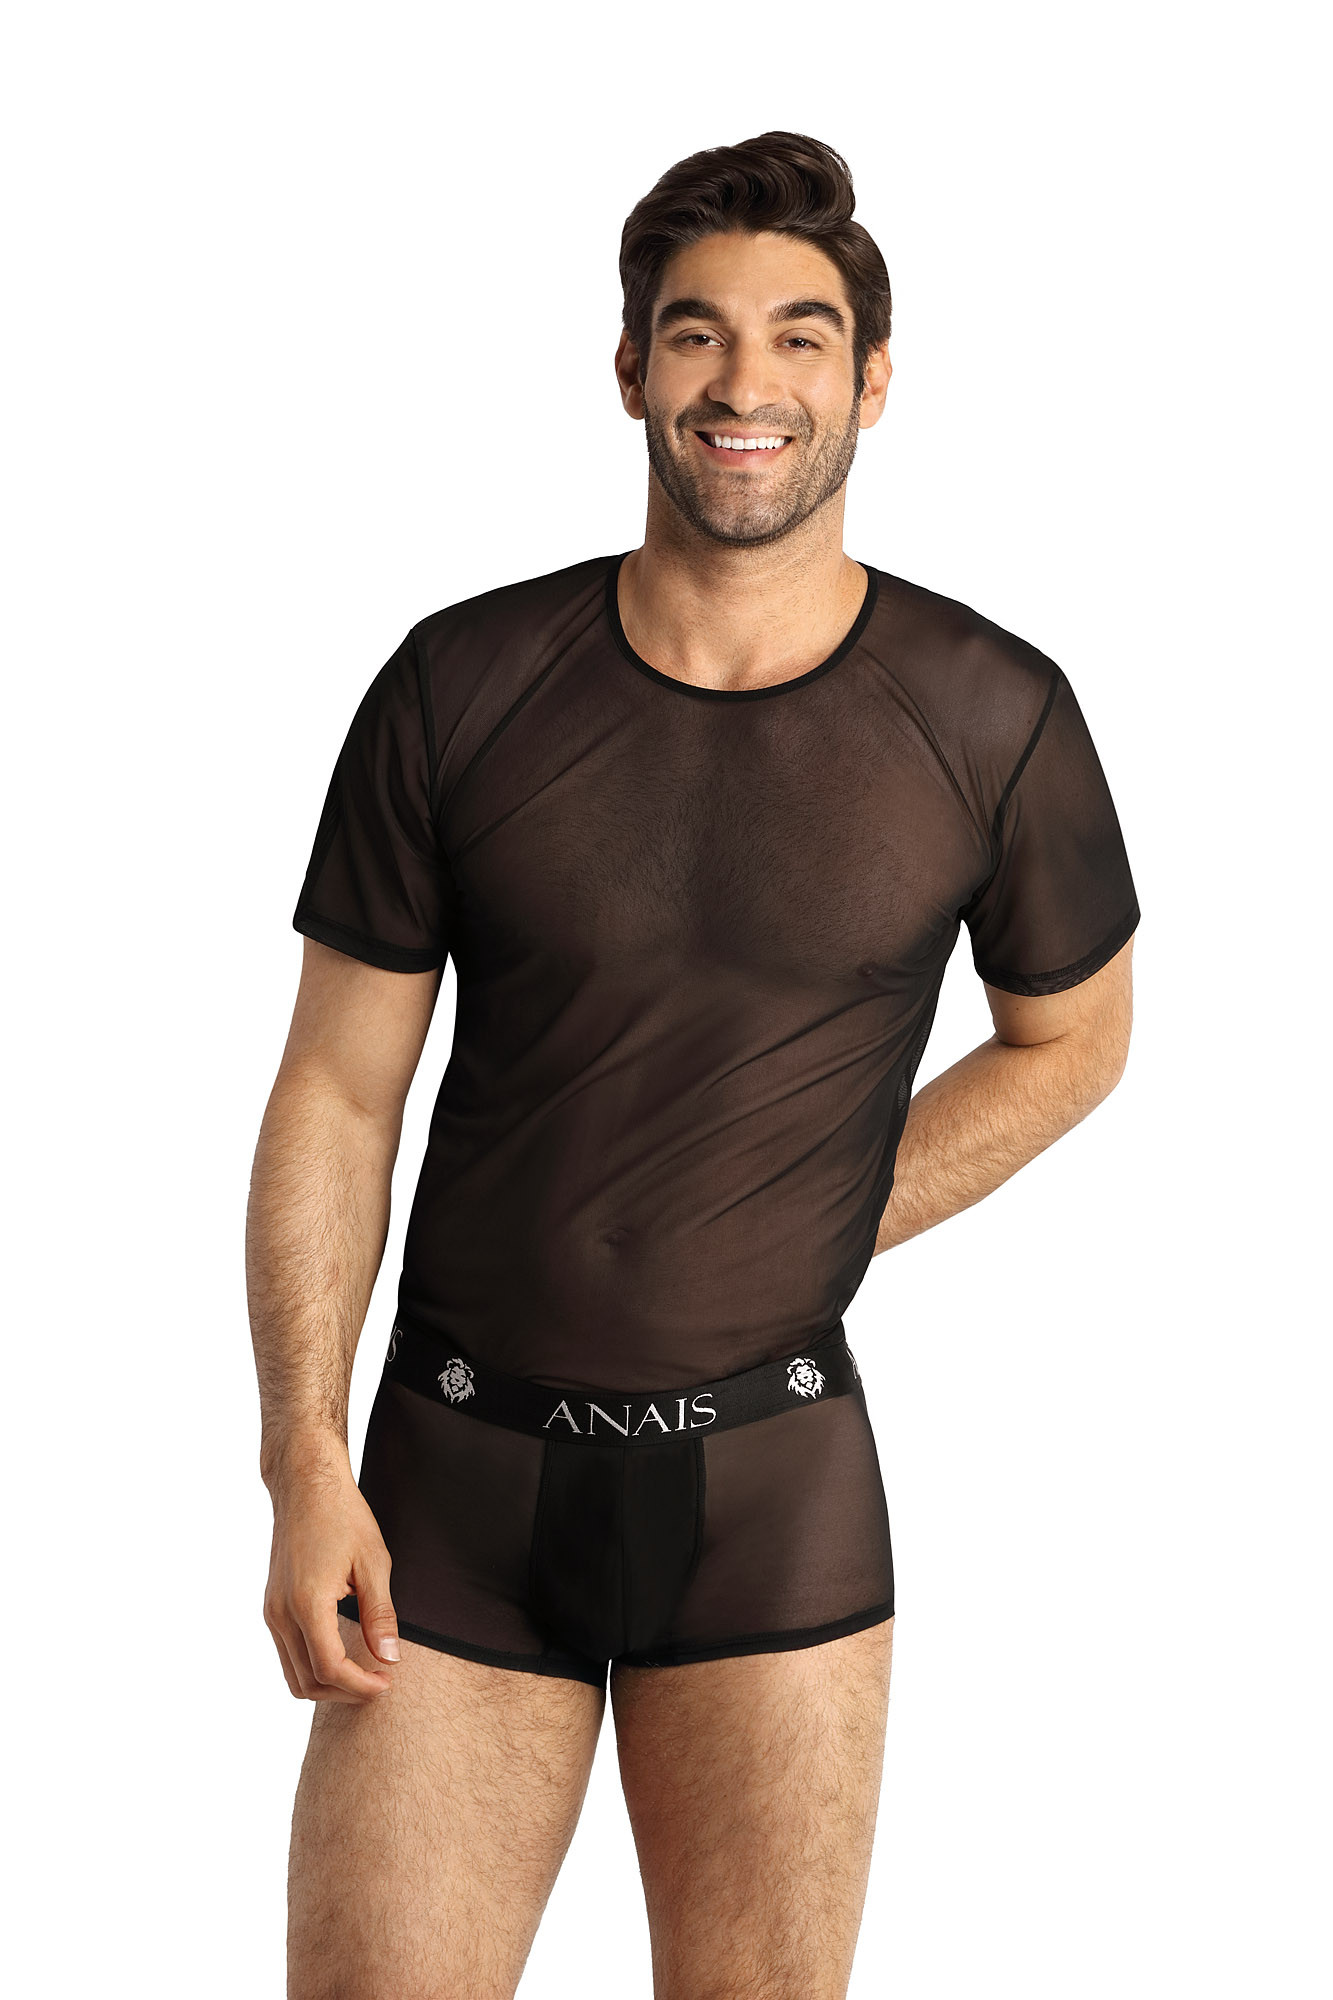 Pánské tričko Eros T-shirt - Anais Velikost: XL, Barva/Velikost: černá